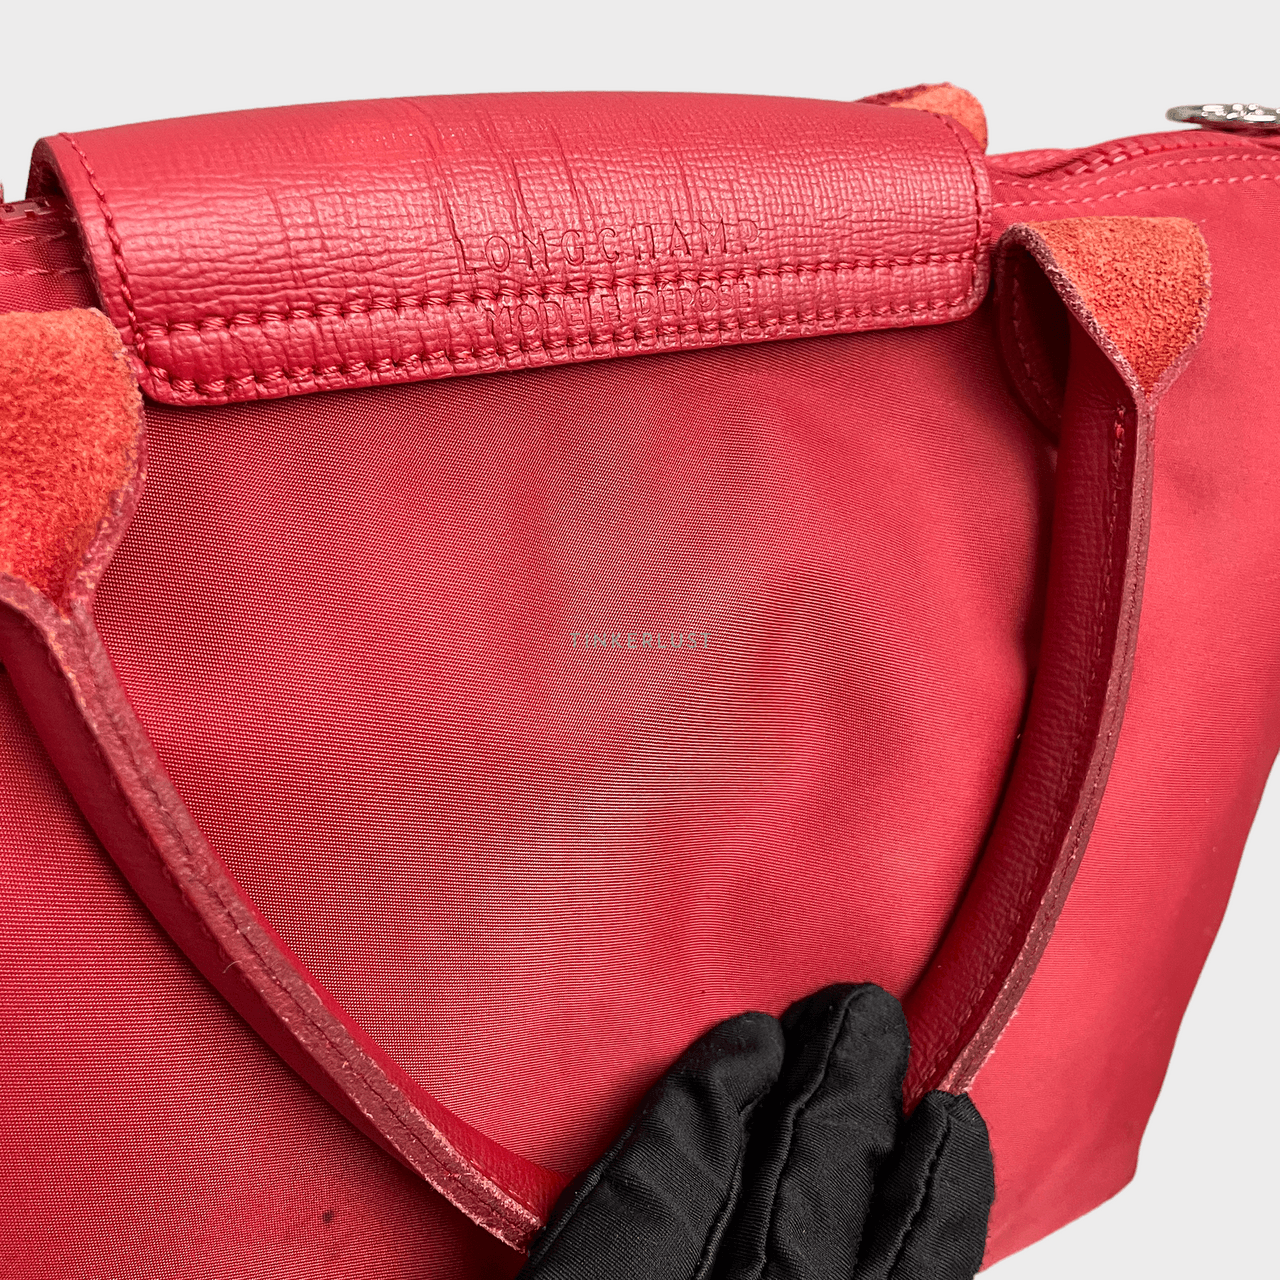 Longchamp Red Tote Bag